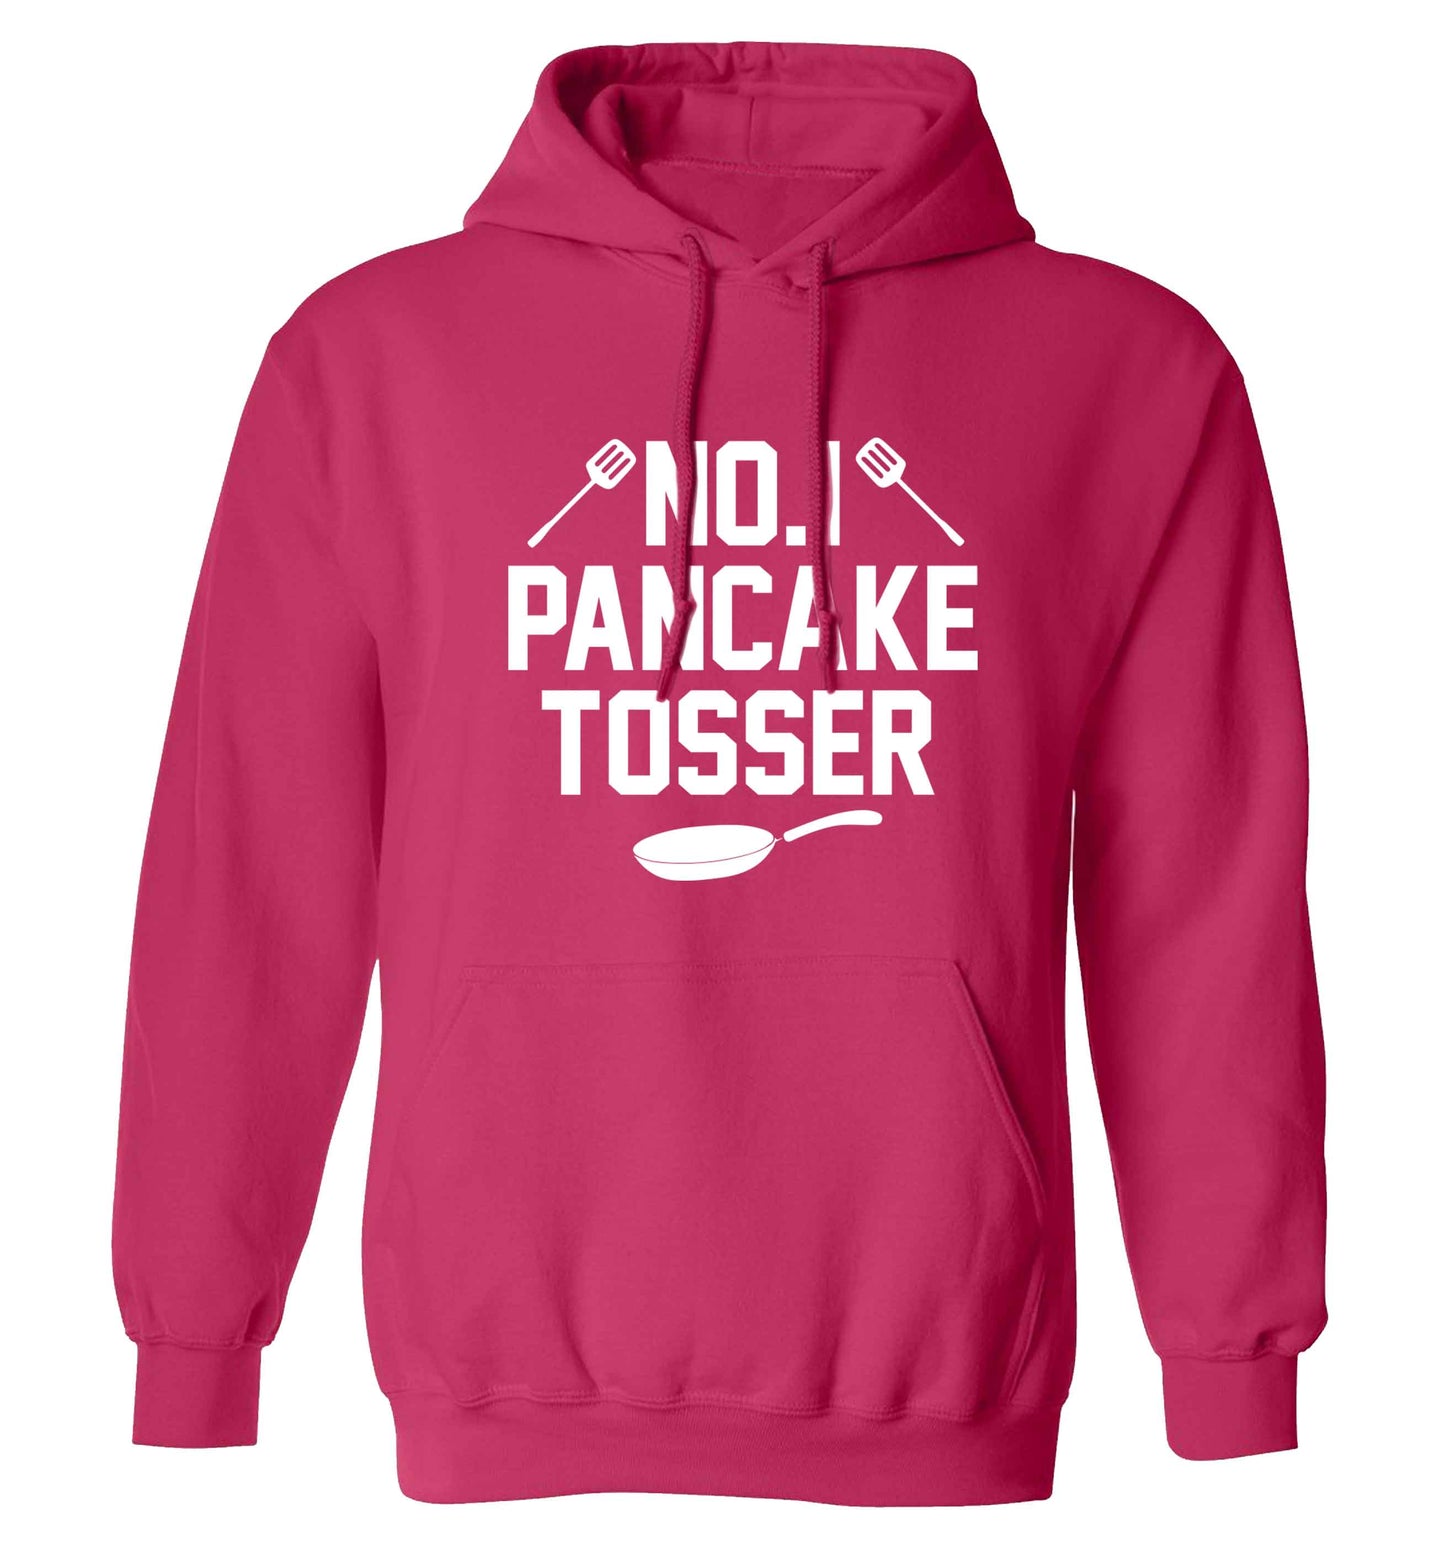 No.1 Pancake tosser adults unisex pink hoodie 2XL